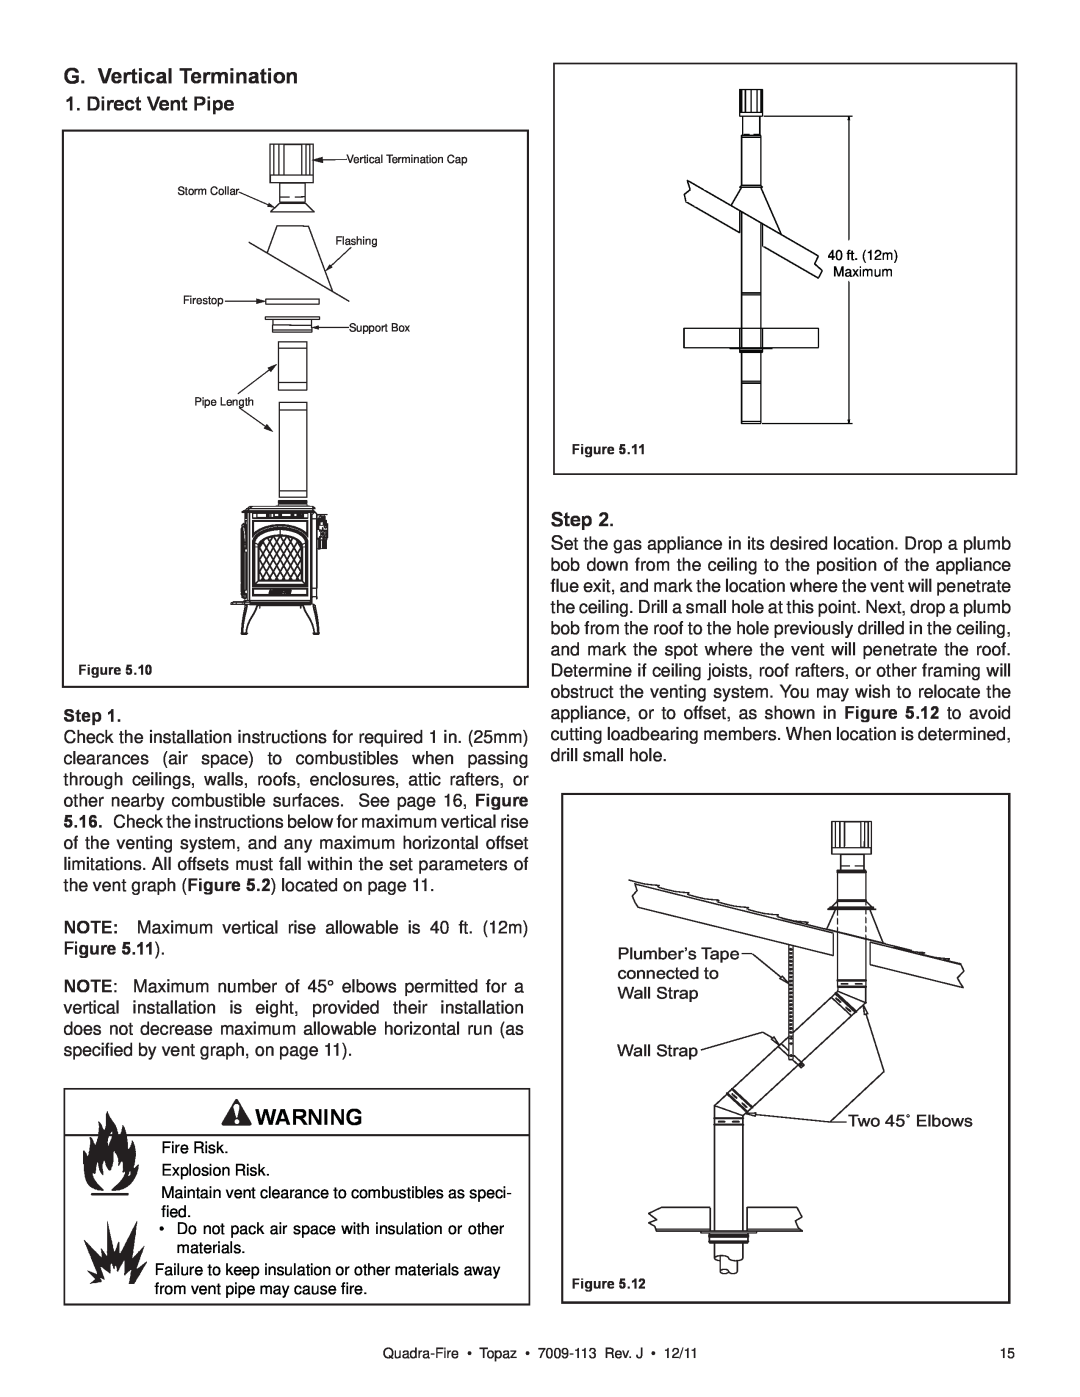 OmniTek 839-1290, 839-1320, 839-1340 owner manual G.Vertical Termination, Direct Vent Pipe, Step 